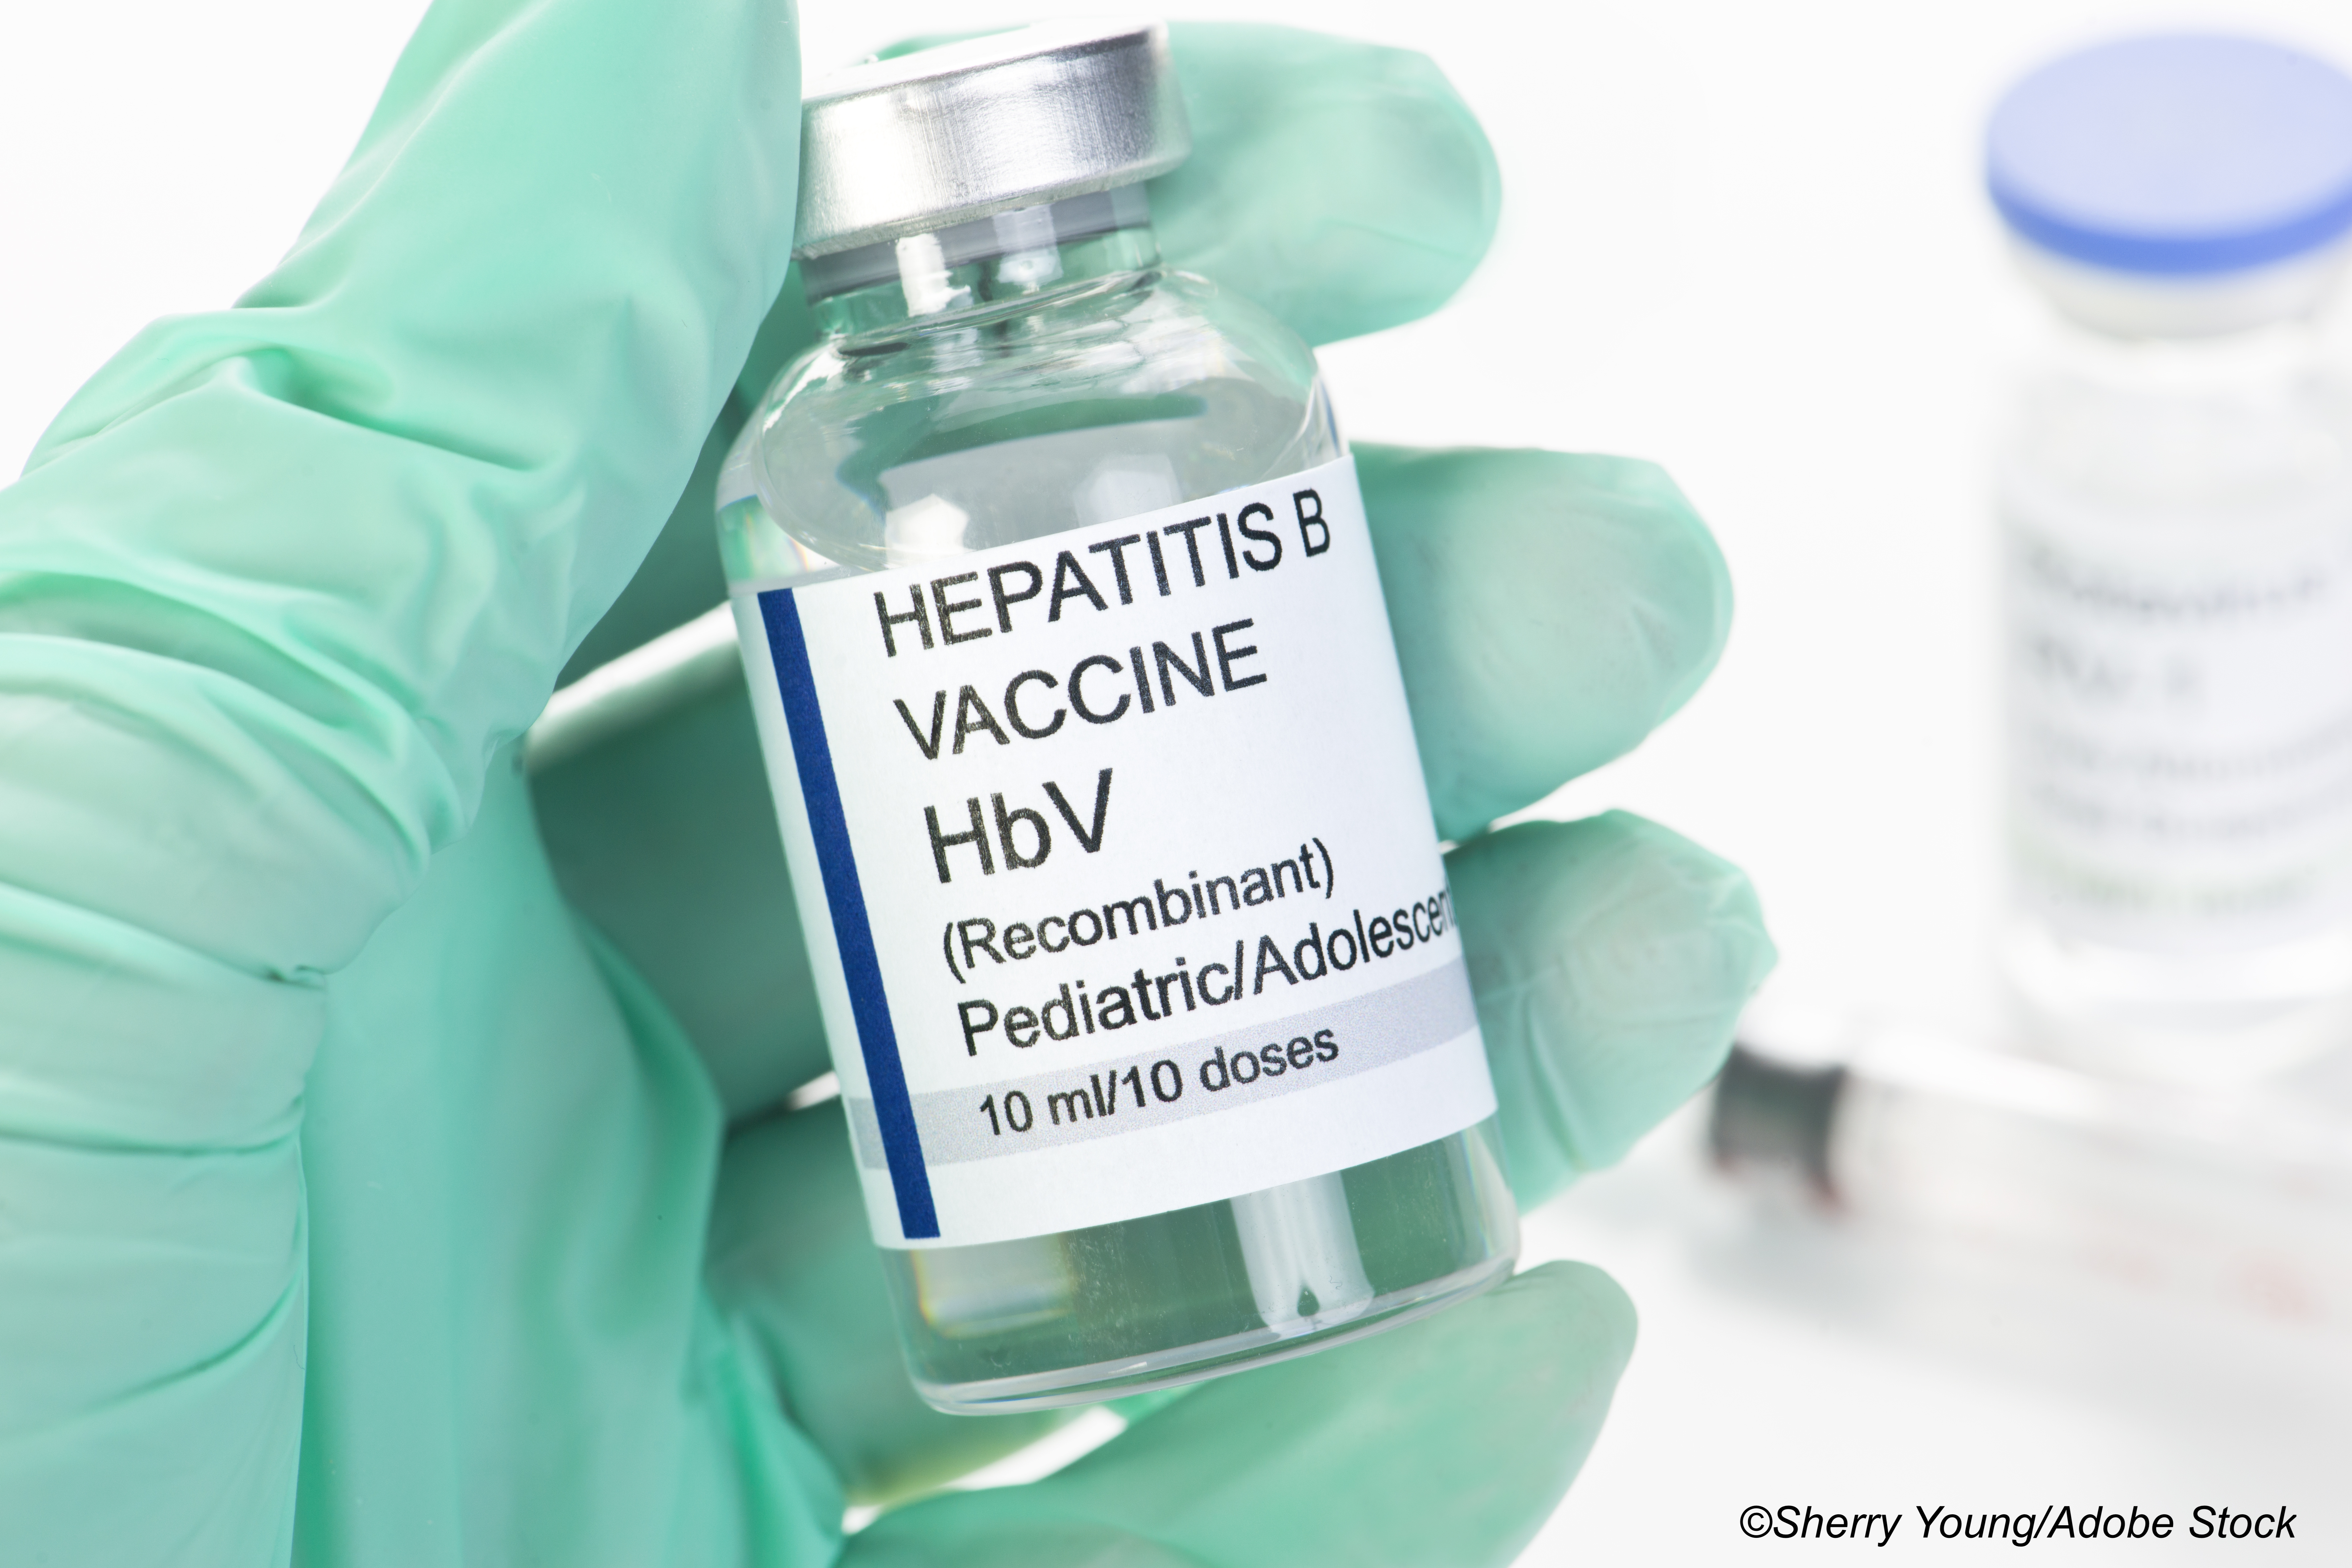 3-Antigen Hep B Vaccine Achieves Quick, Robust Seroprotection Rates